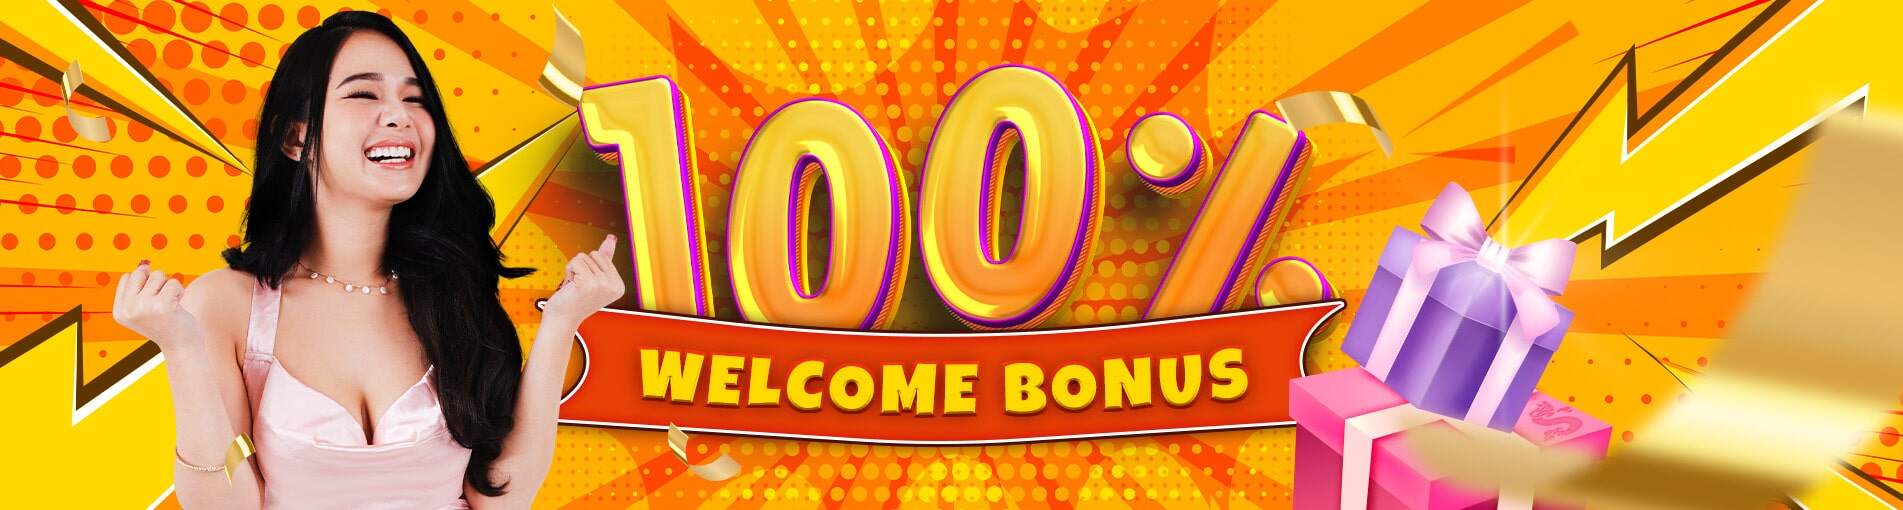 Welcome Bonus 100%